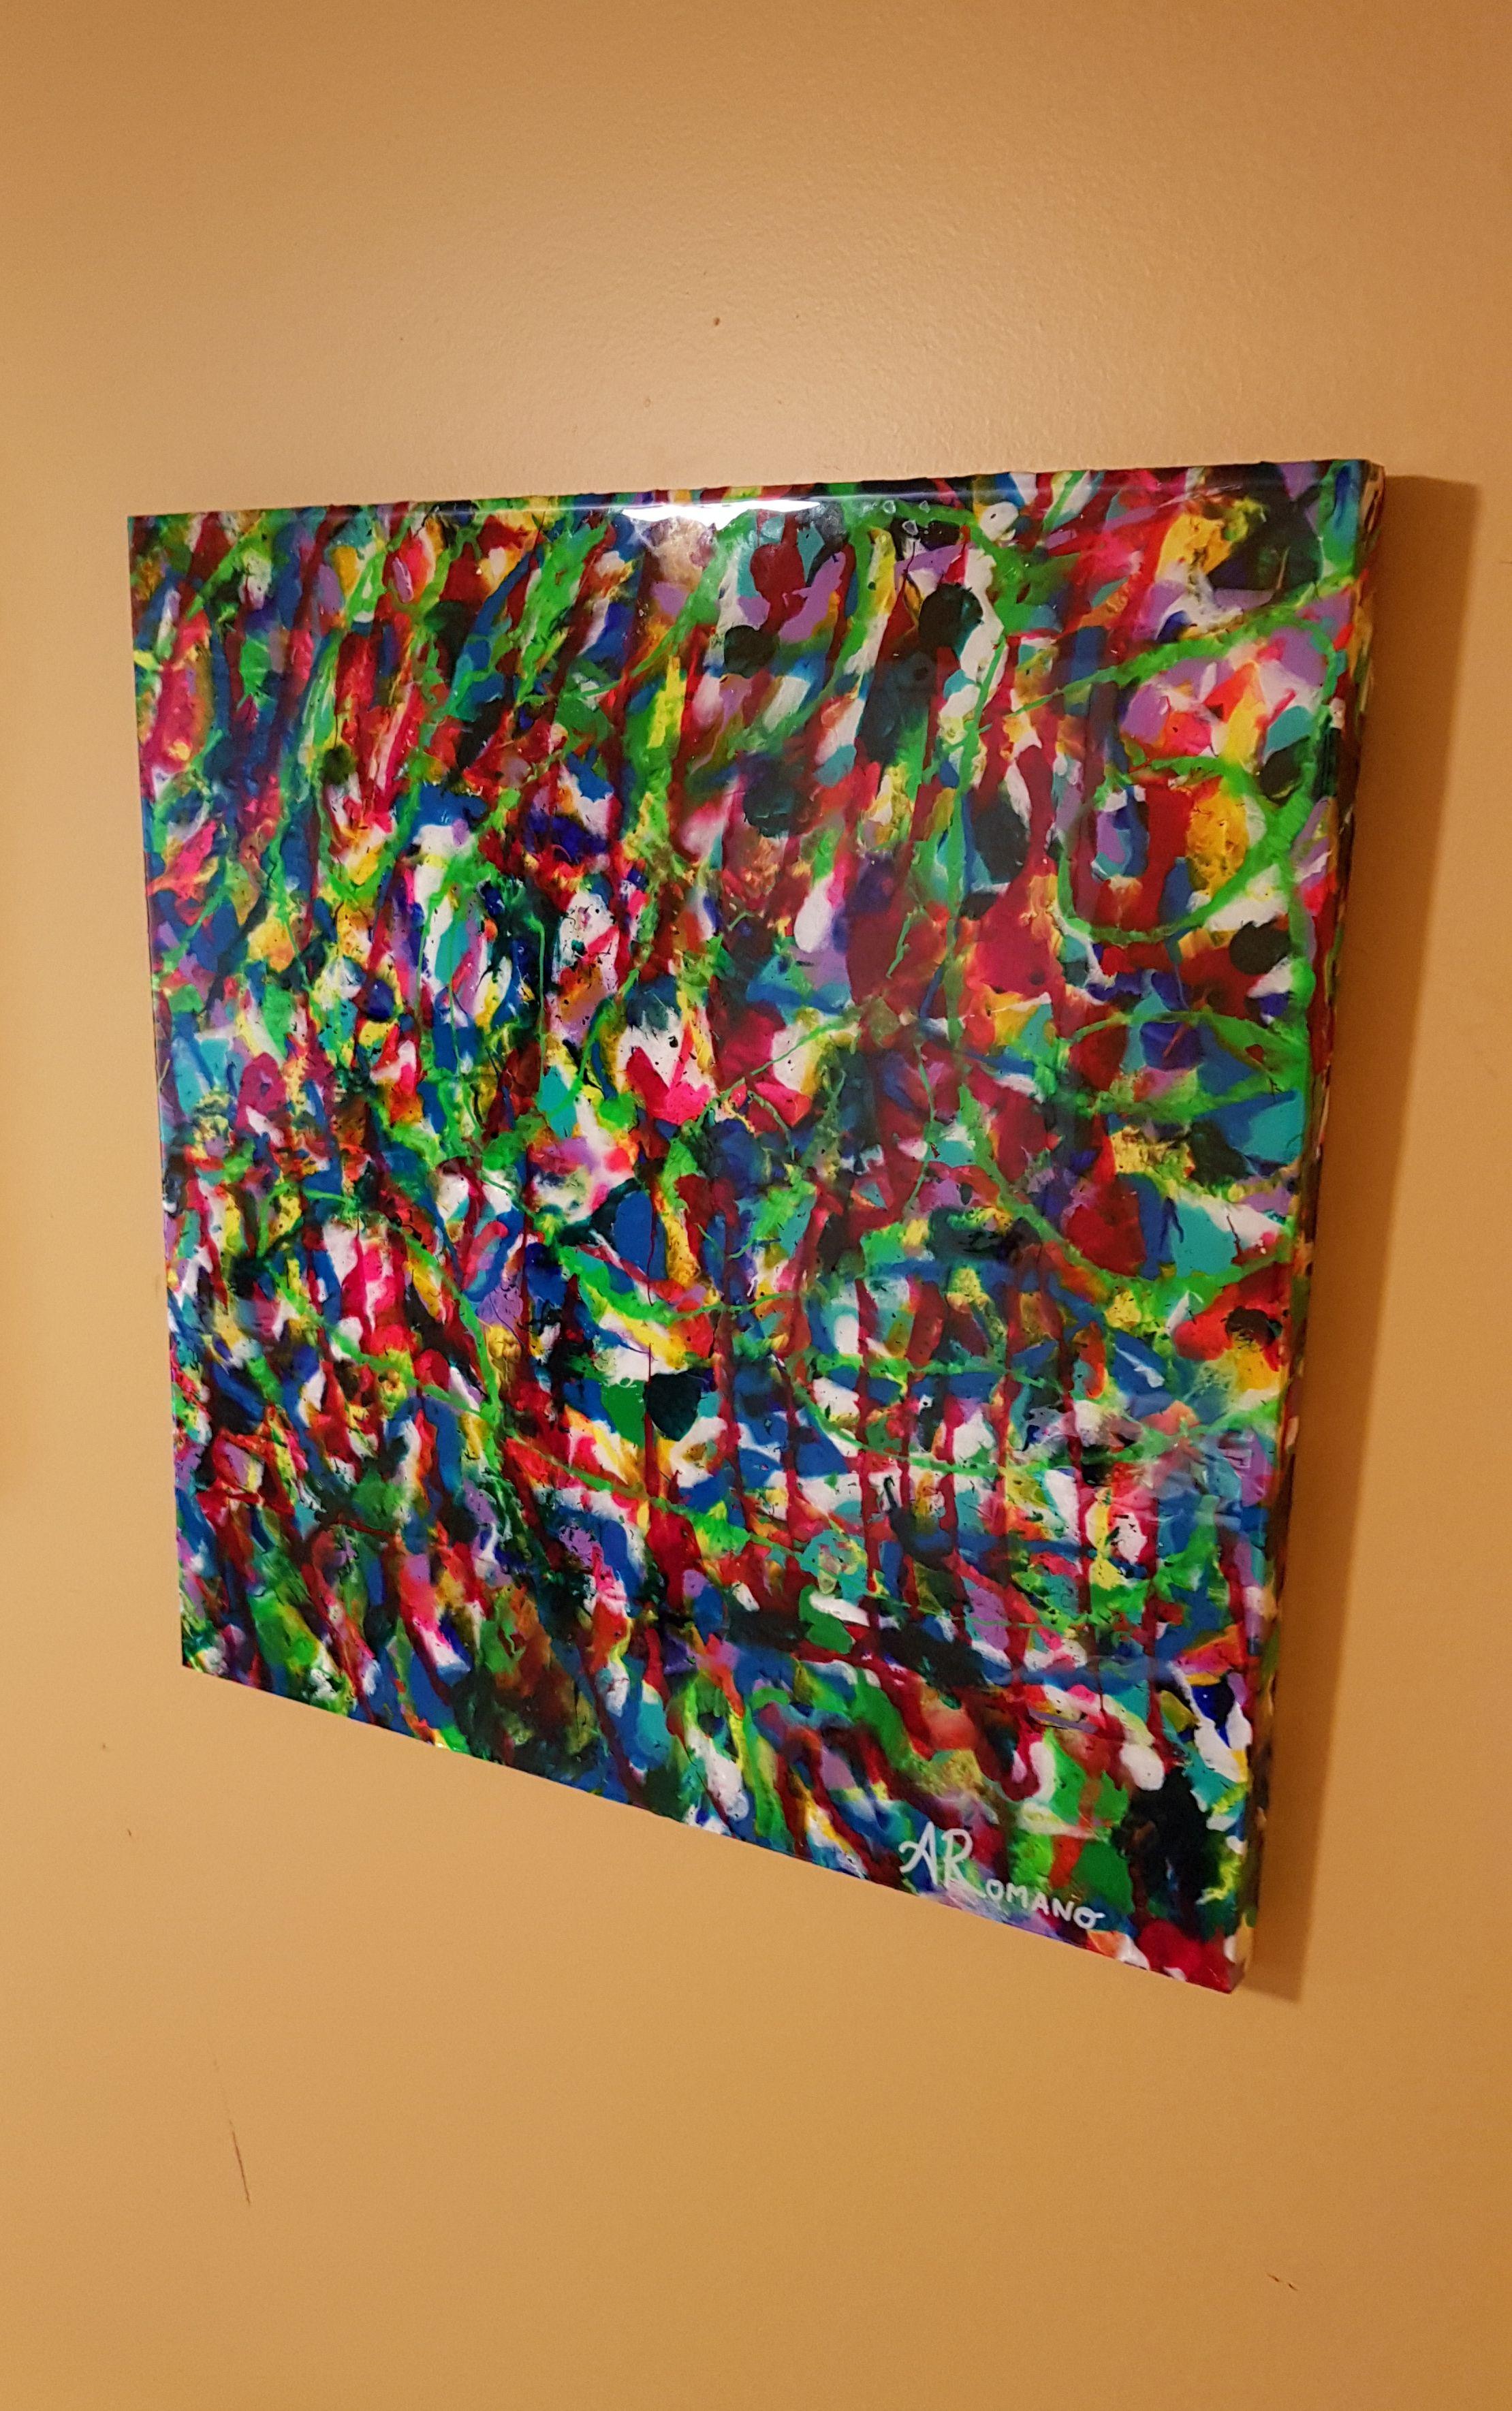 Colourful Consciousness, Mischtechnik auf Holzplatte (Abstrakter Expressionismus), Mixed Media Art, von Alexandra Romano